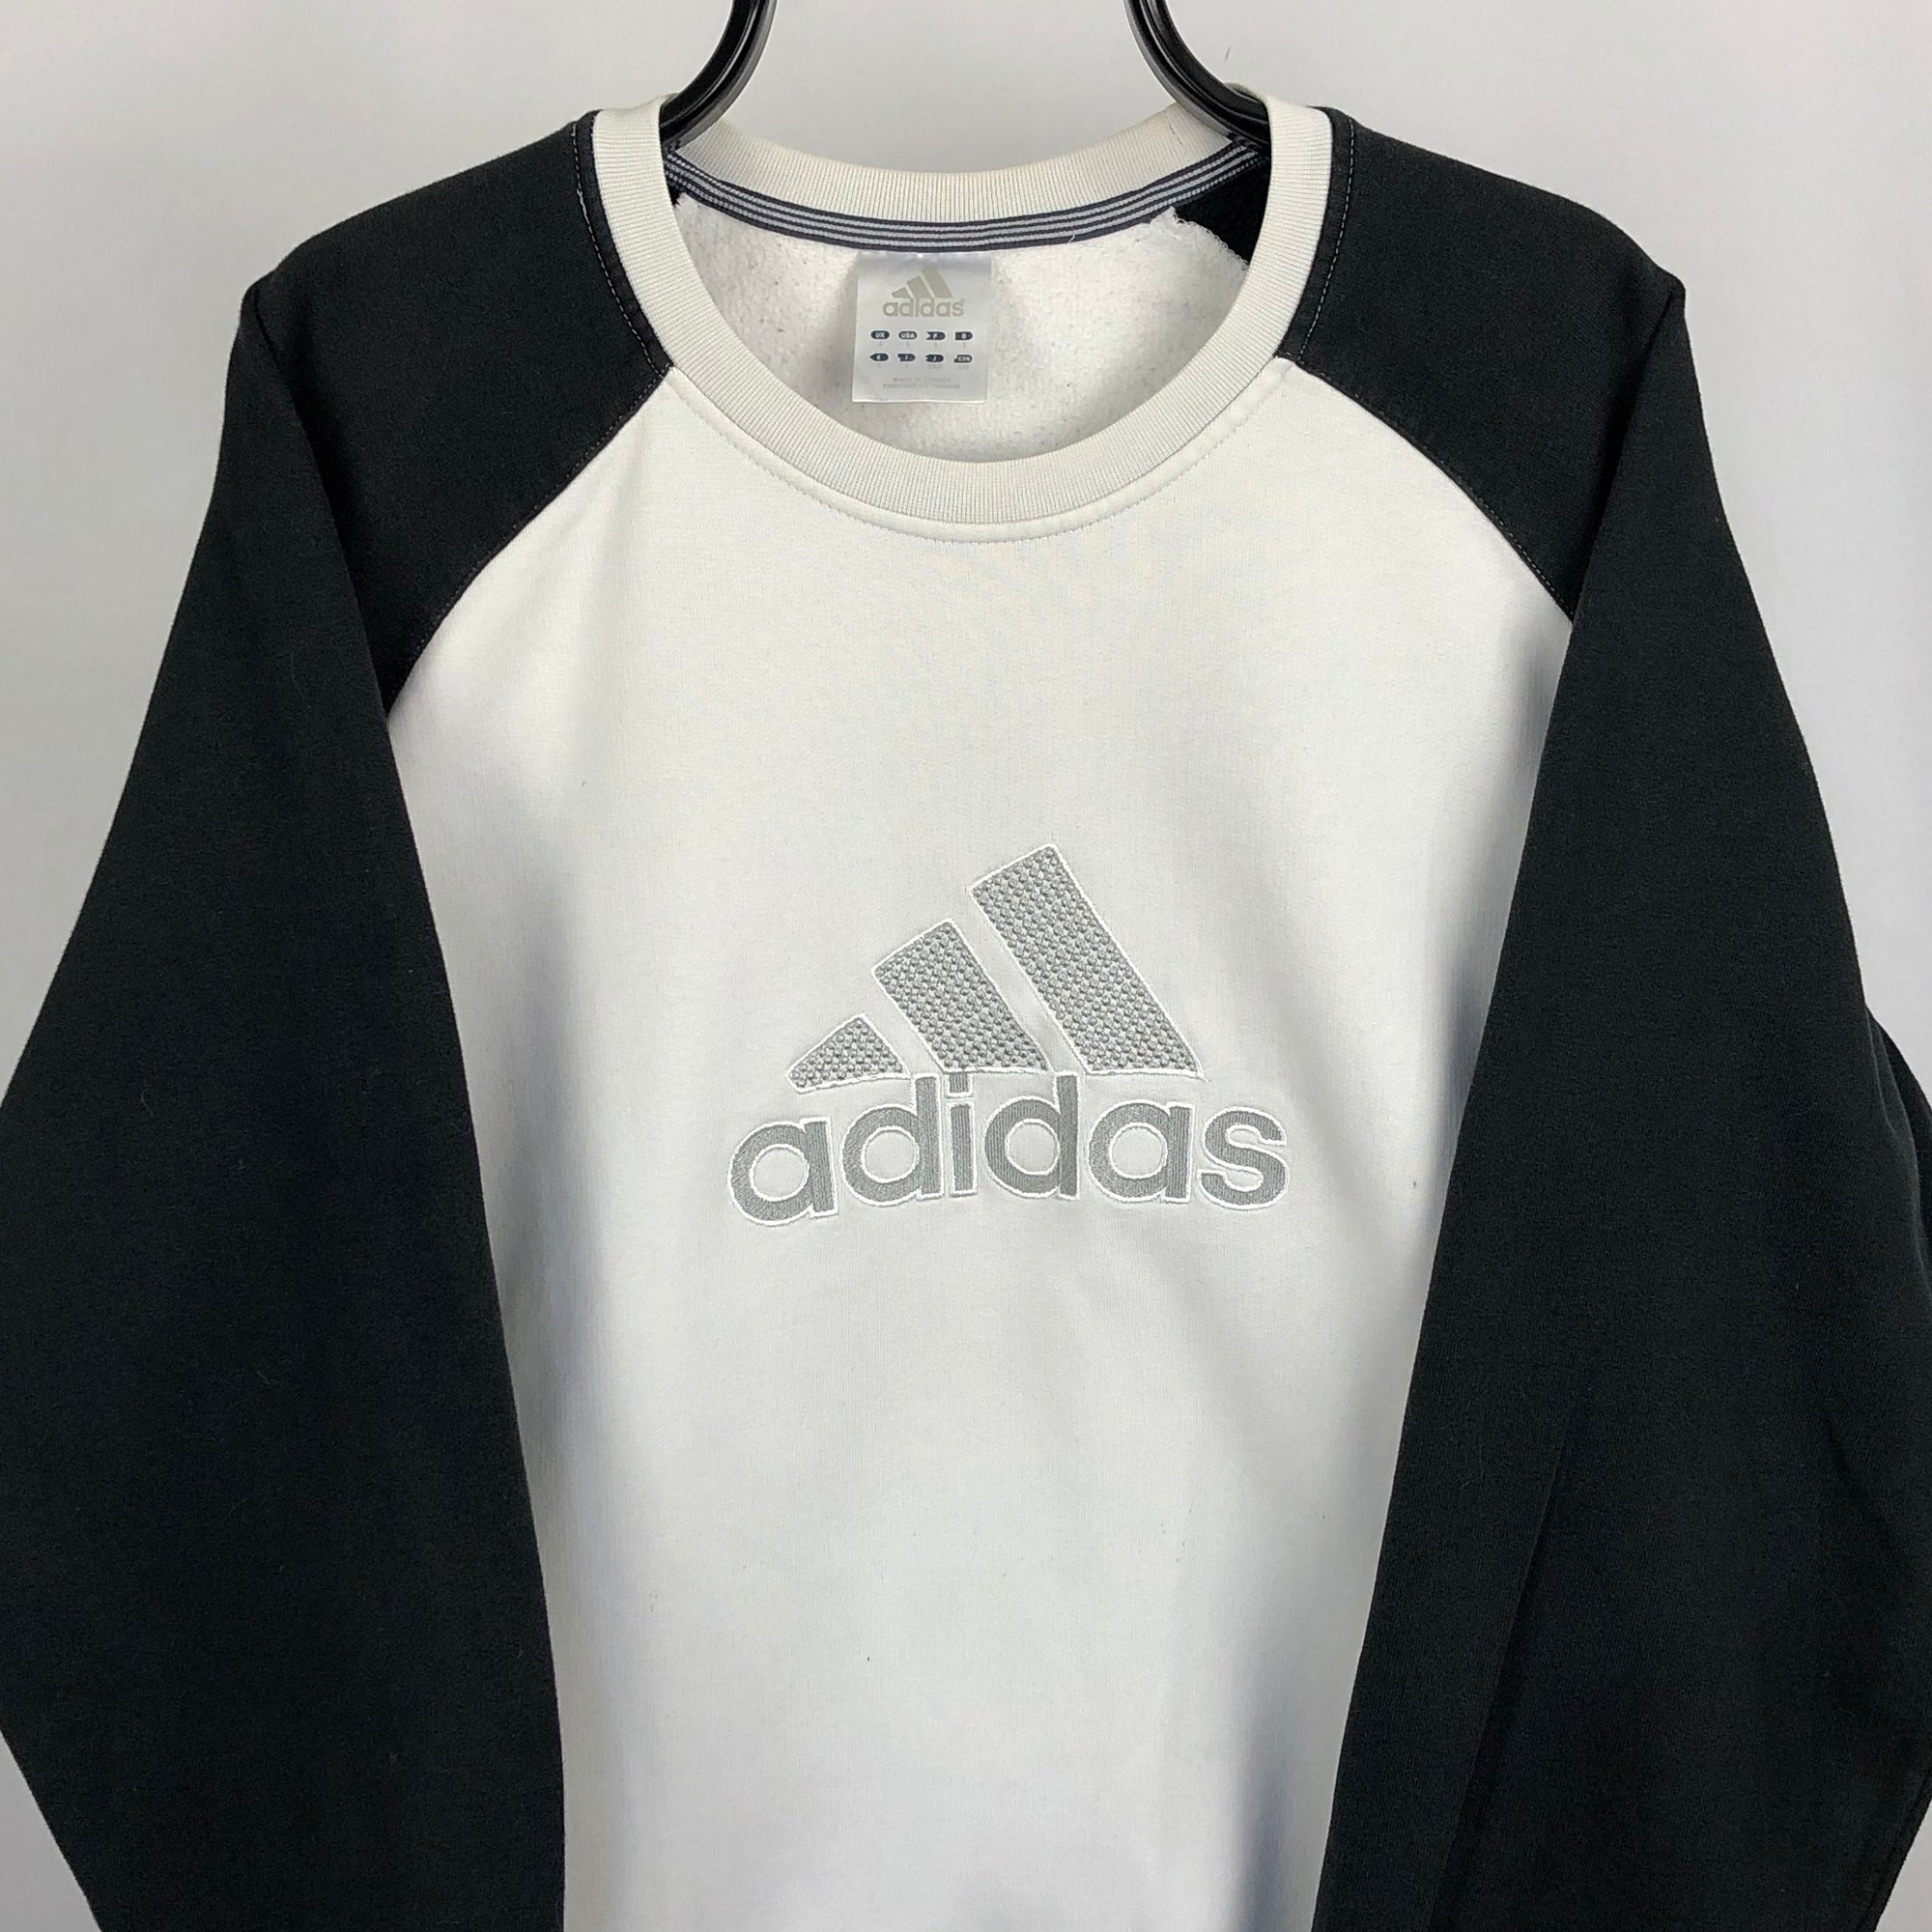 Vintage Adidas Spellout Sweatshirt in Black/White - Men's Large/Women's XL